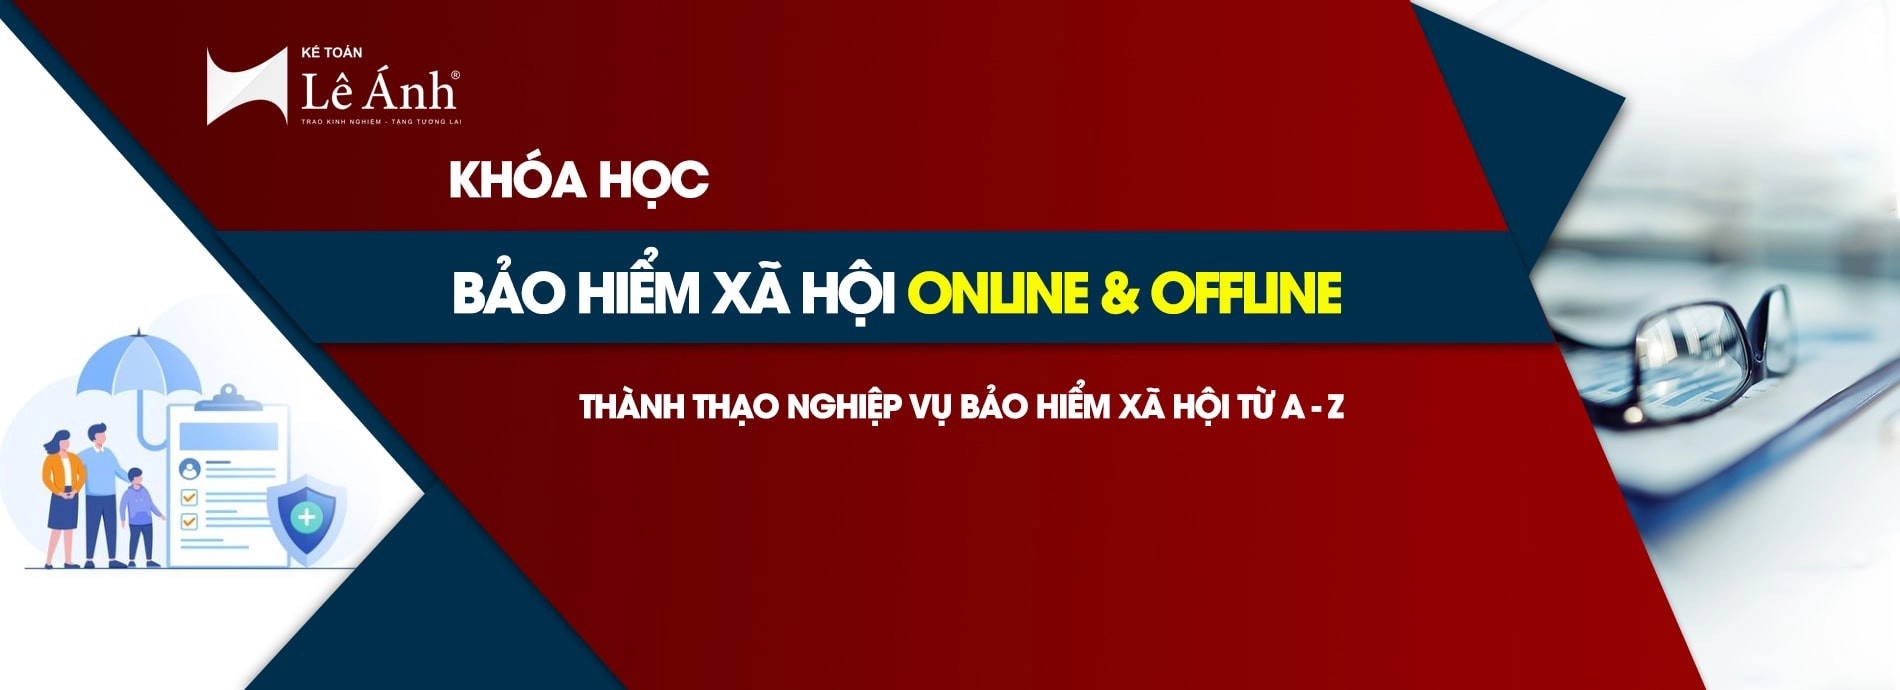 khoa-hoc-bao-hiem-xa-hoi-online-offline